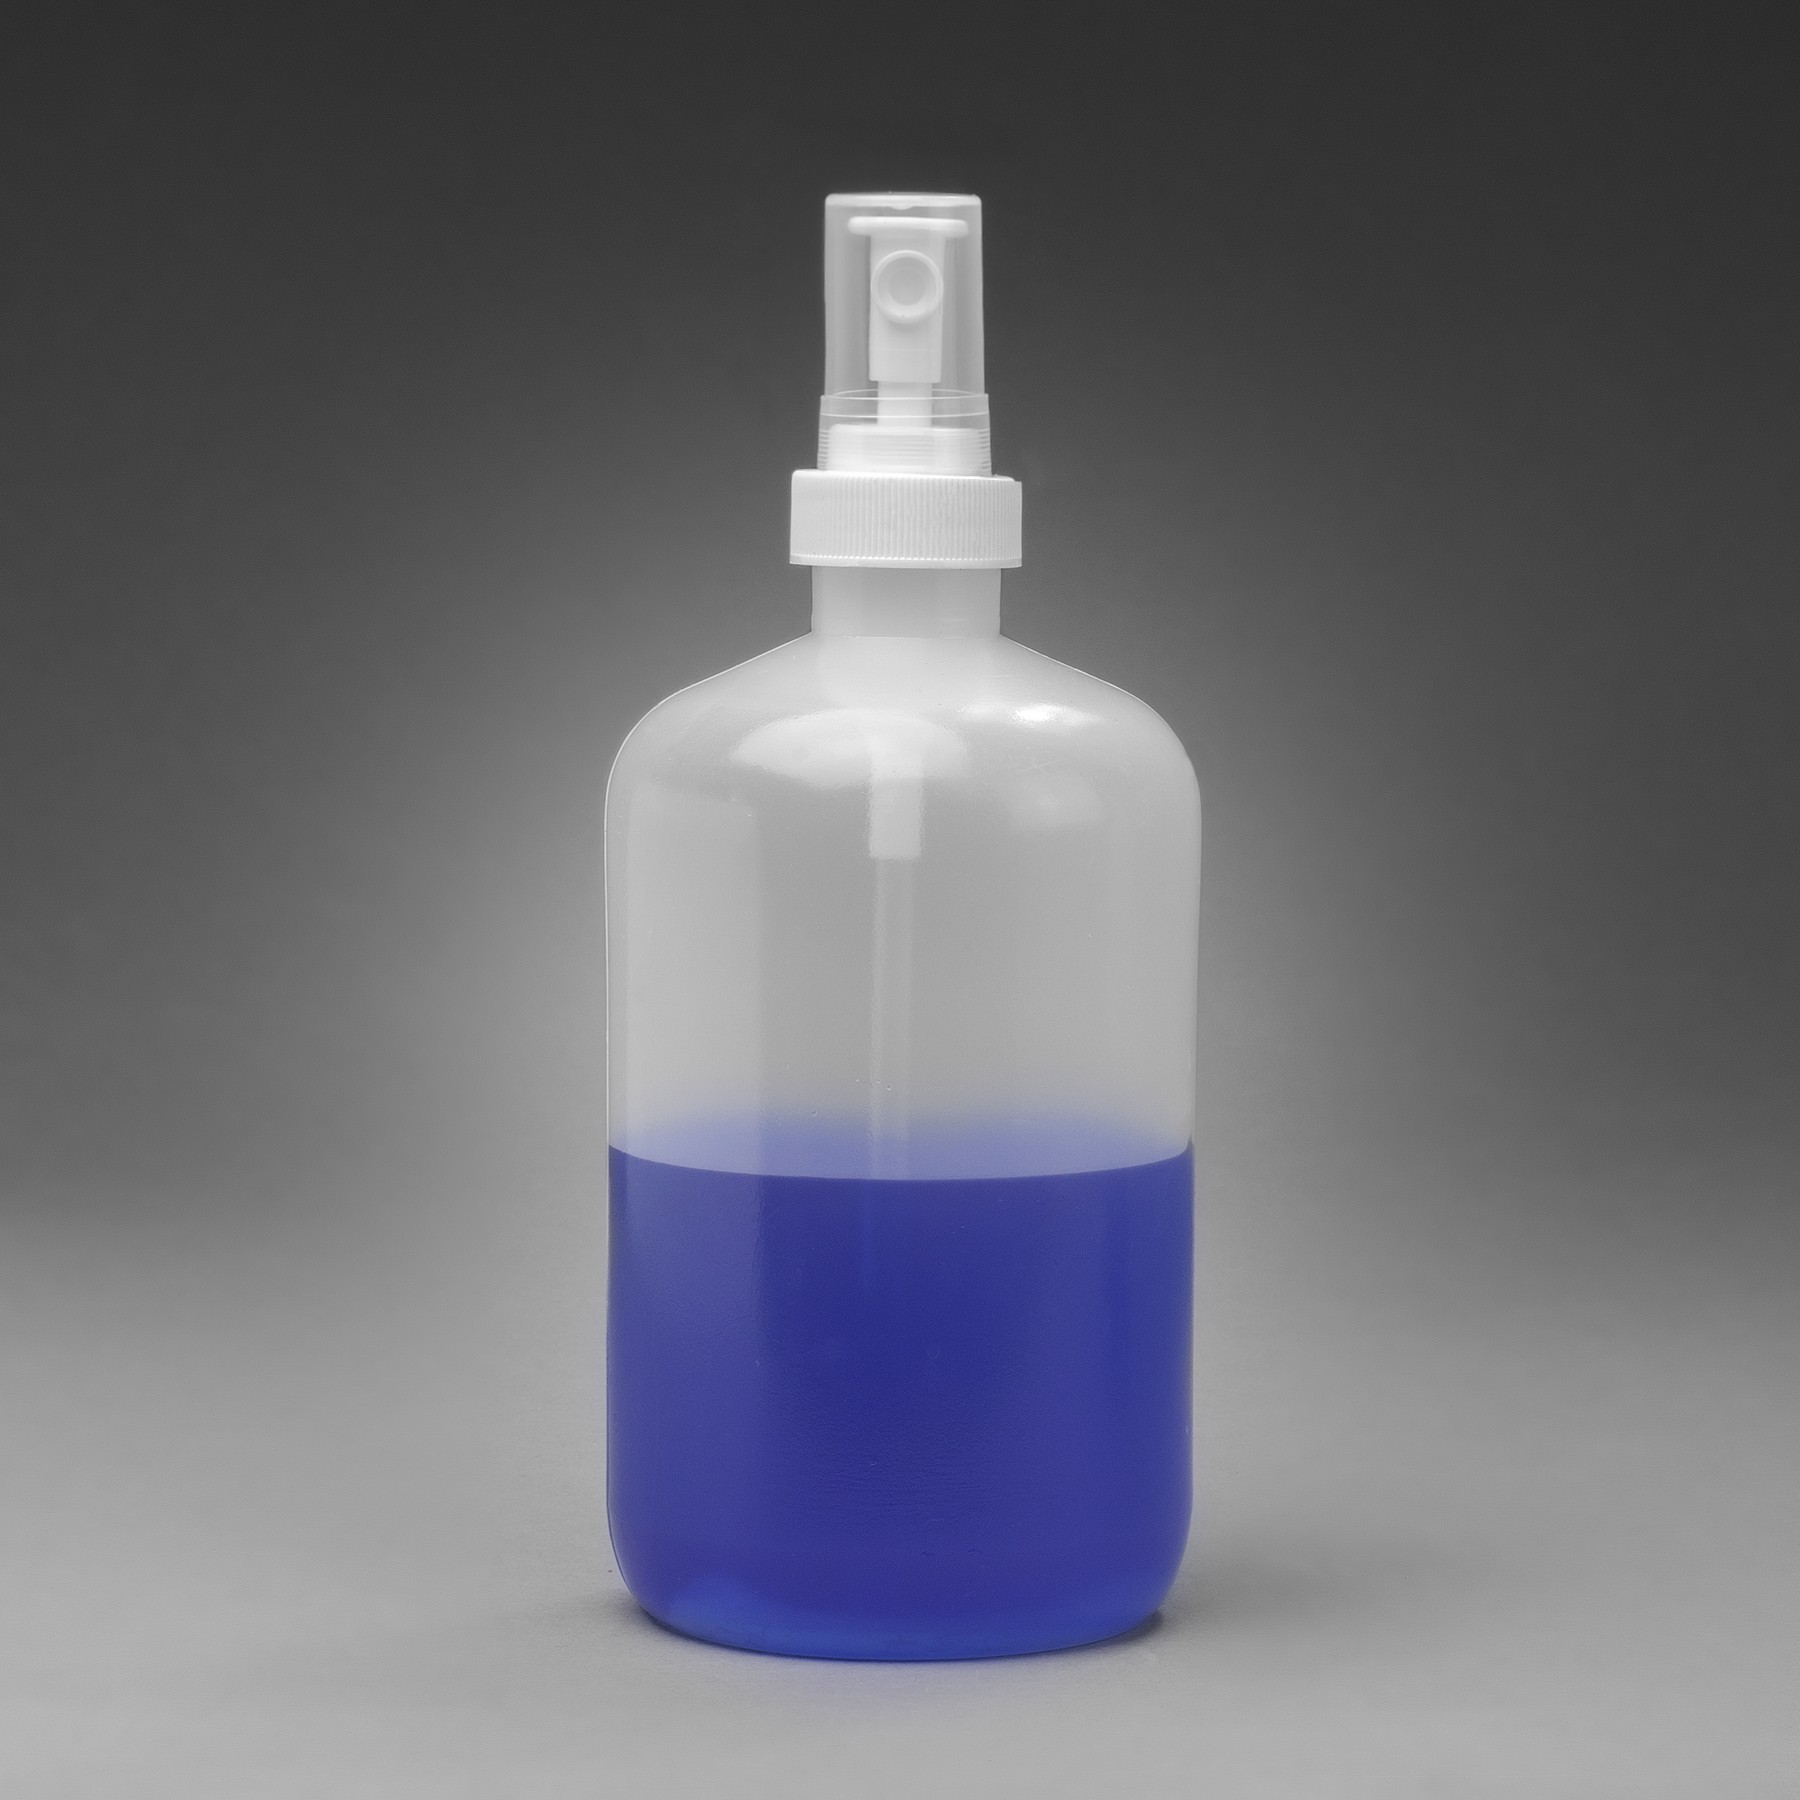 SP Bel-Art Spray Pump 500ml (16oz) Polyethylene Bottles (Pack of 12)